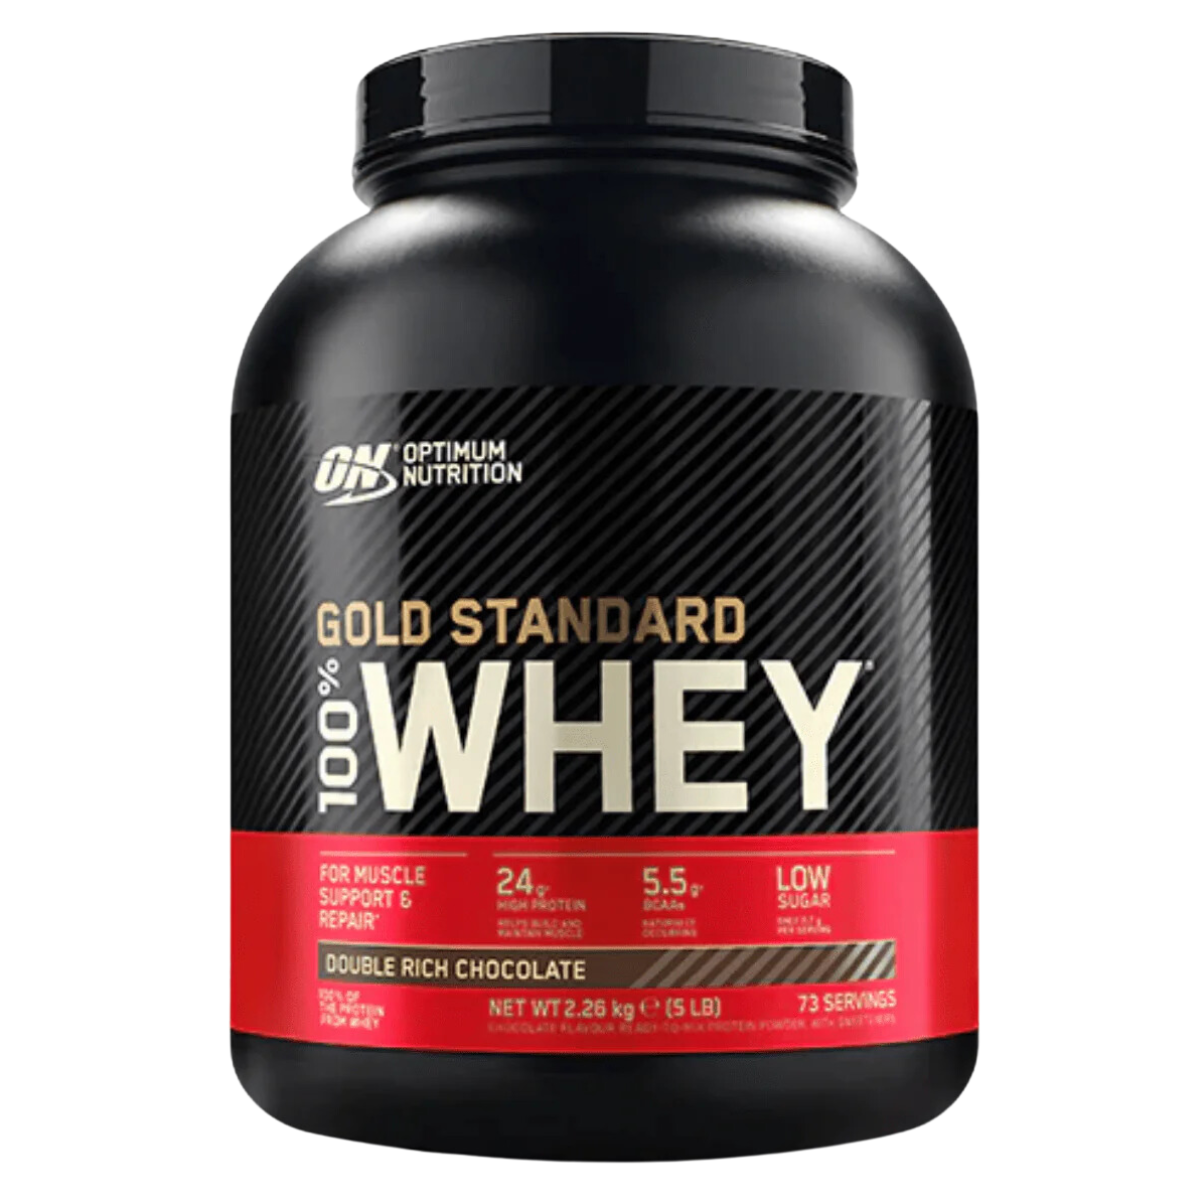 Optimum Nutrition Gold Standard 100% Whey 2.3kg + GRATIS Optimum Nutrition Gold Standard Pre-Workout